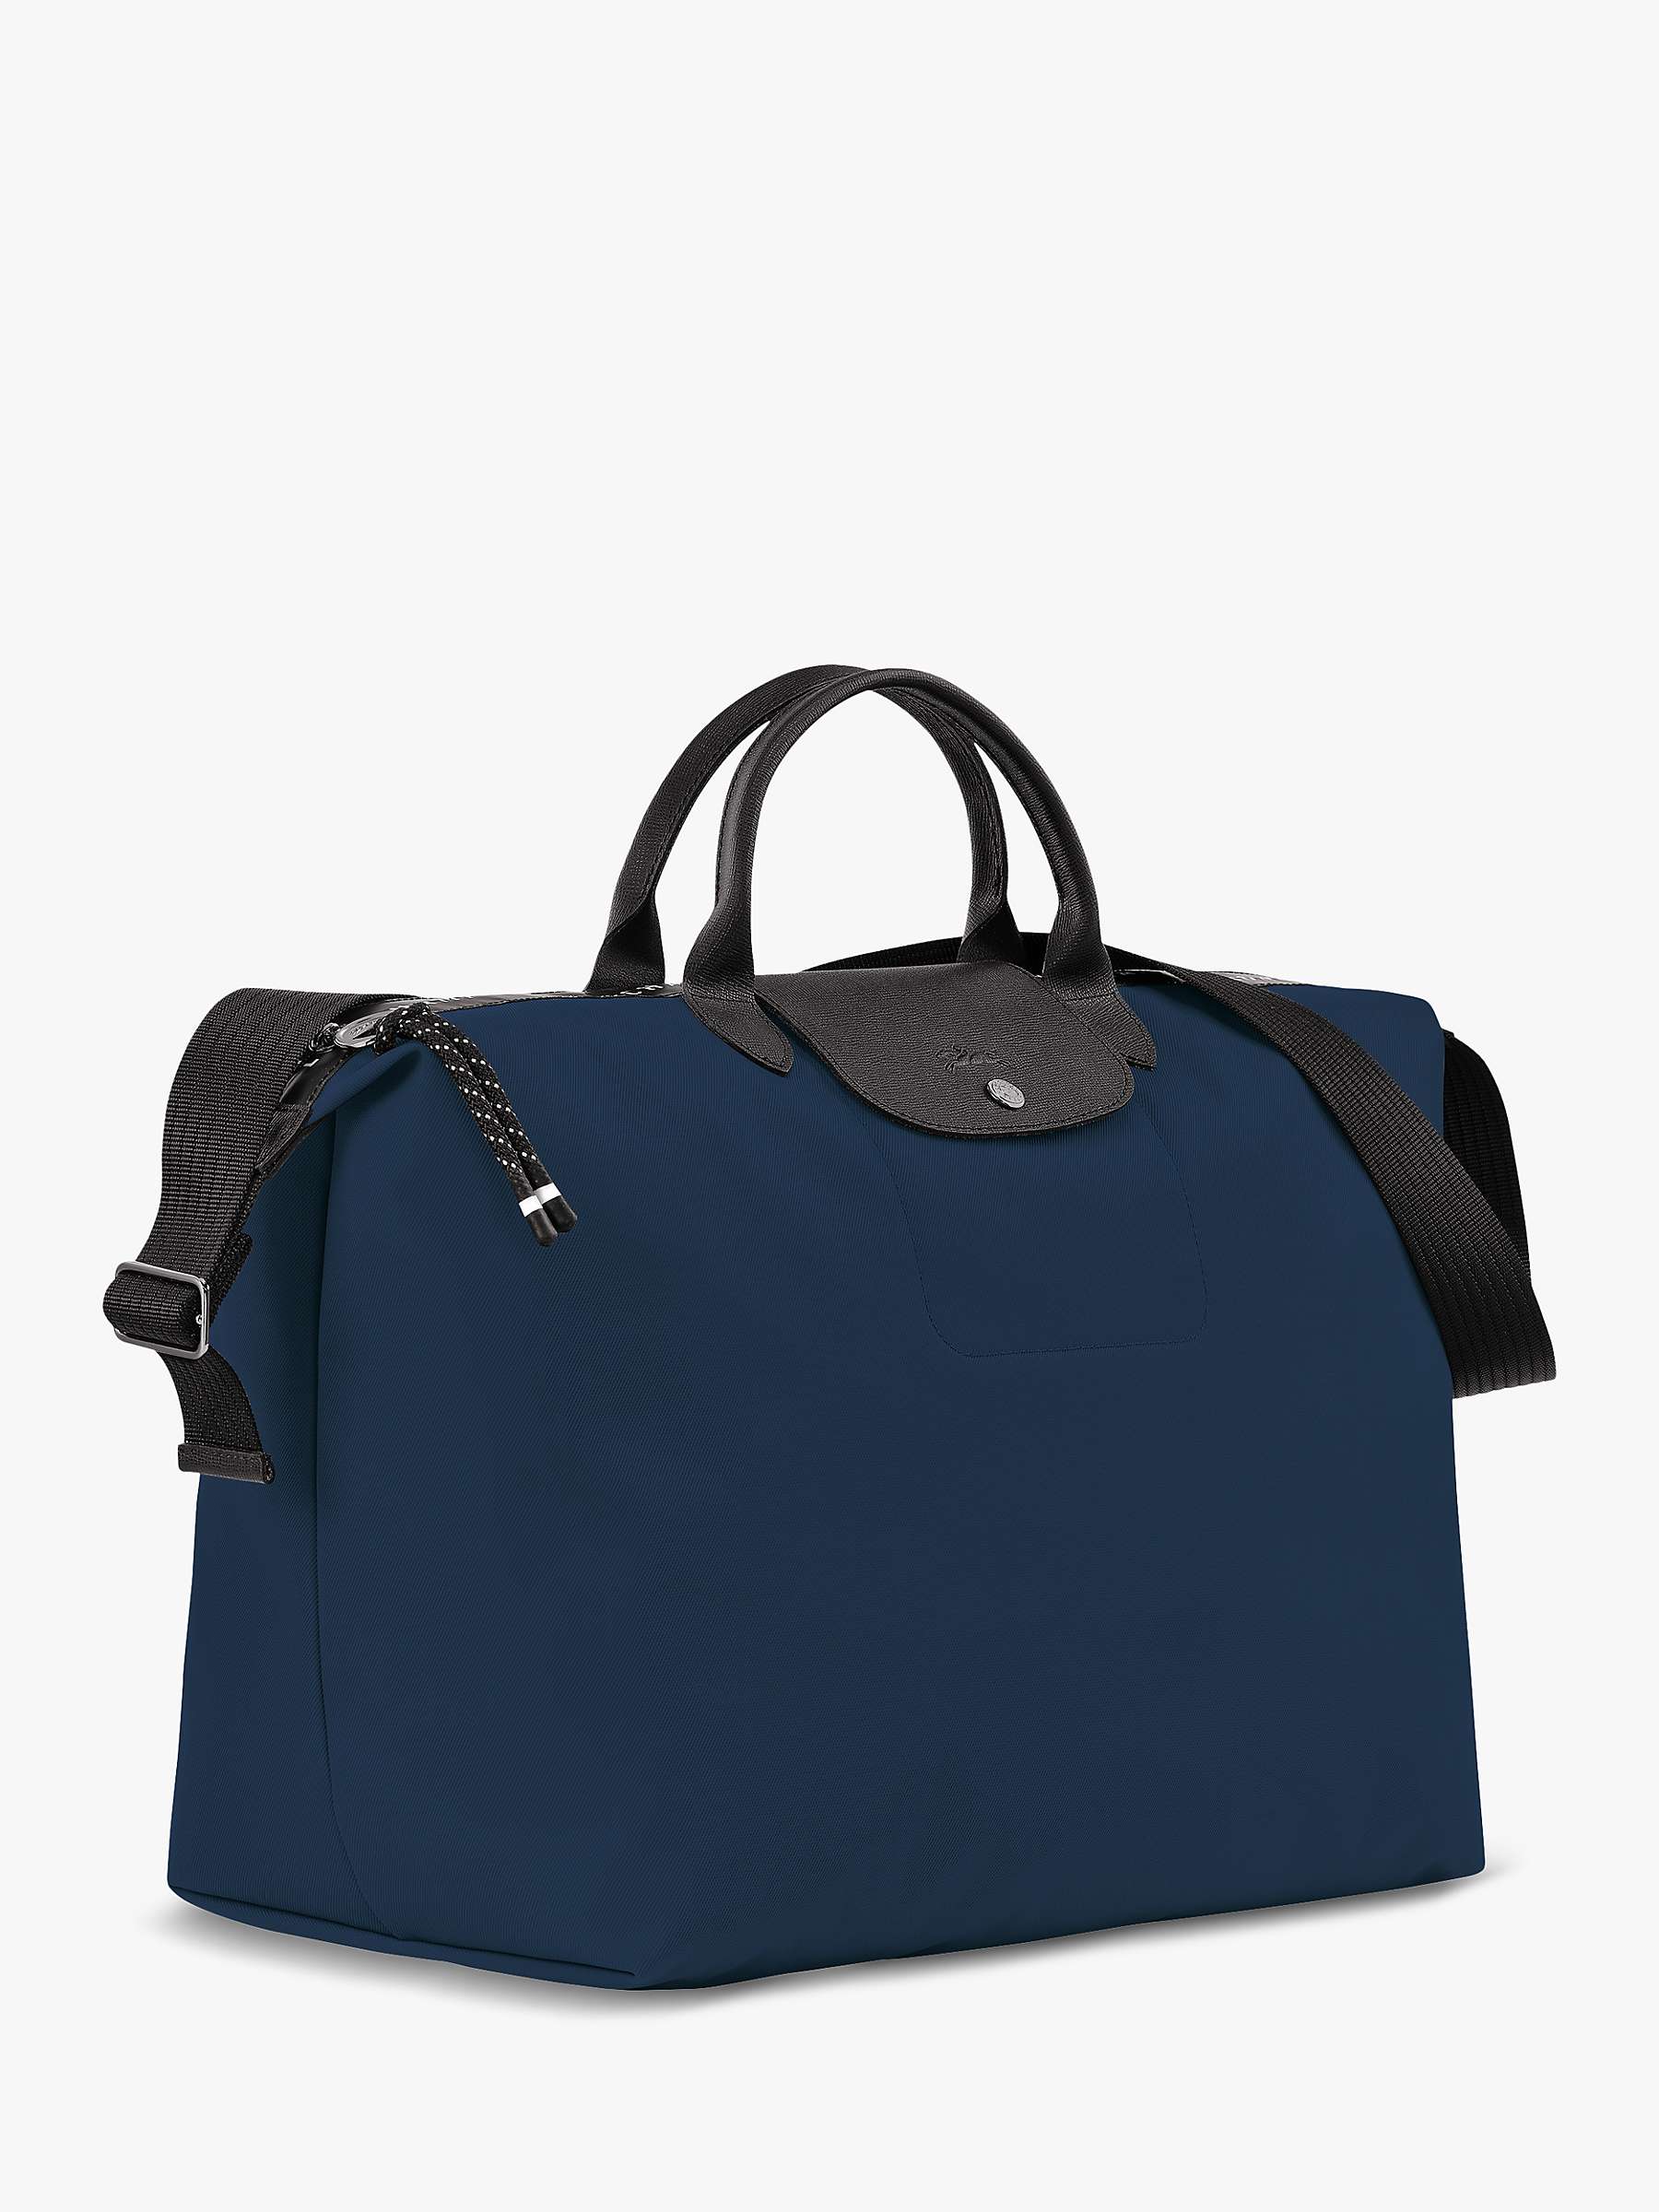 Buy Longchamp Le Pliage Energy Small Travel Bag Online at johnlewis.com